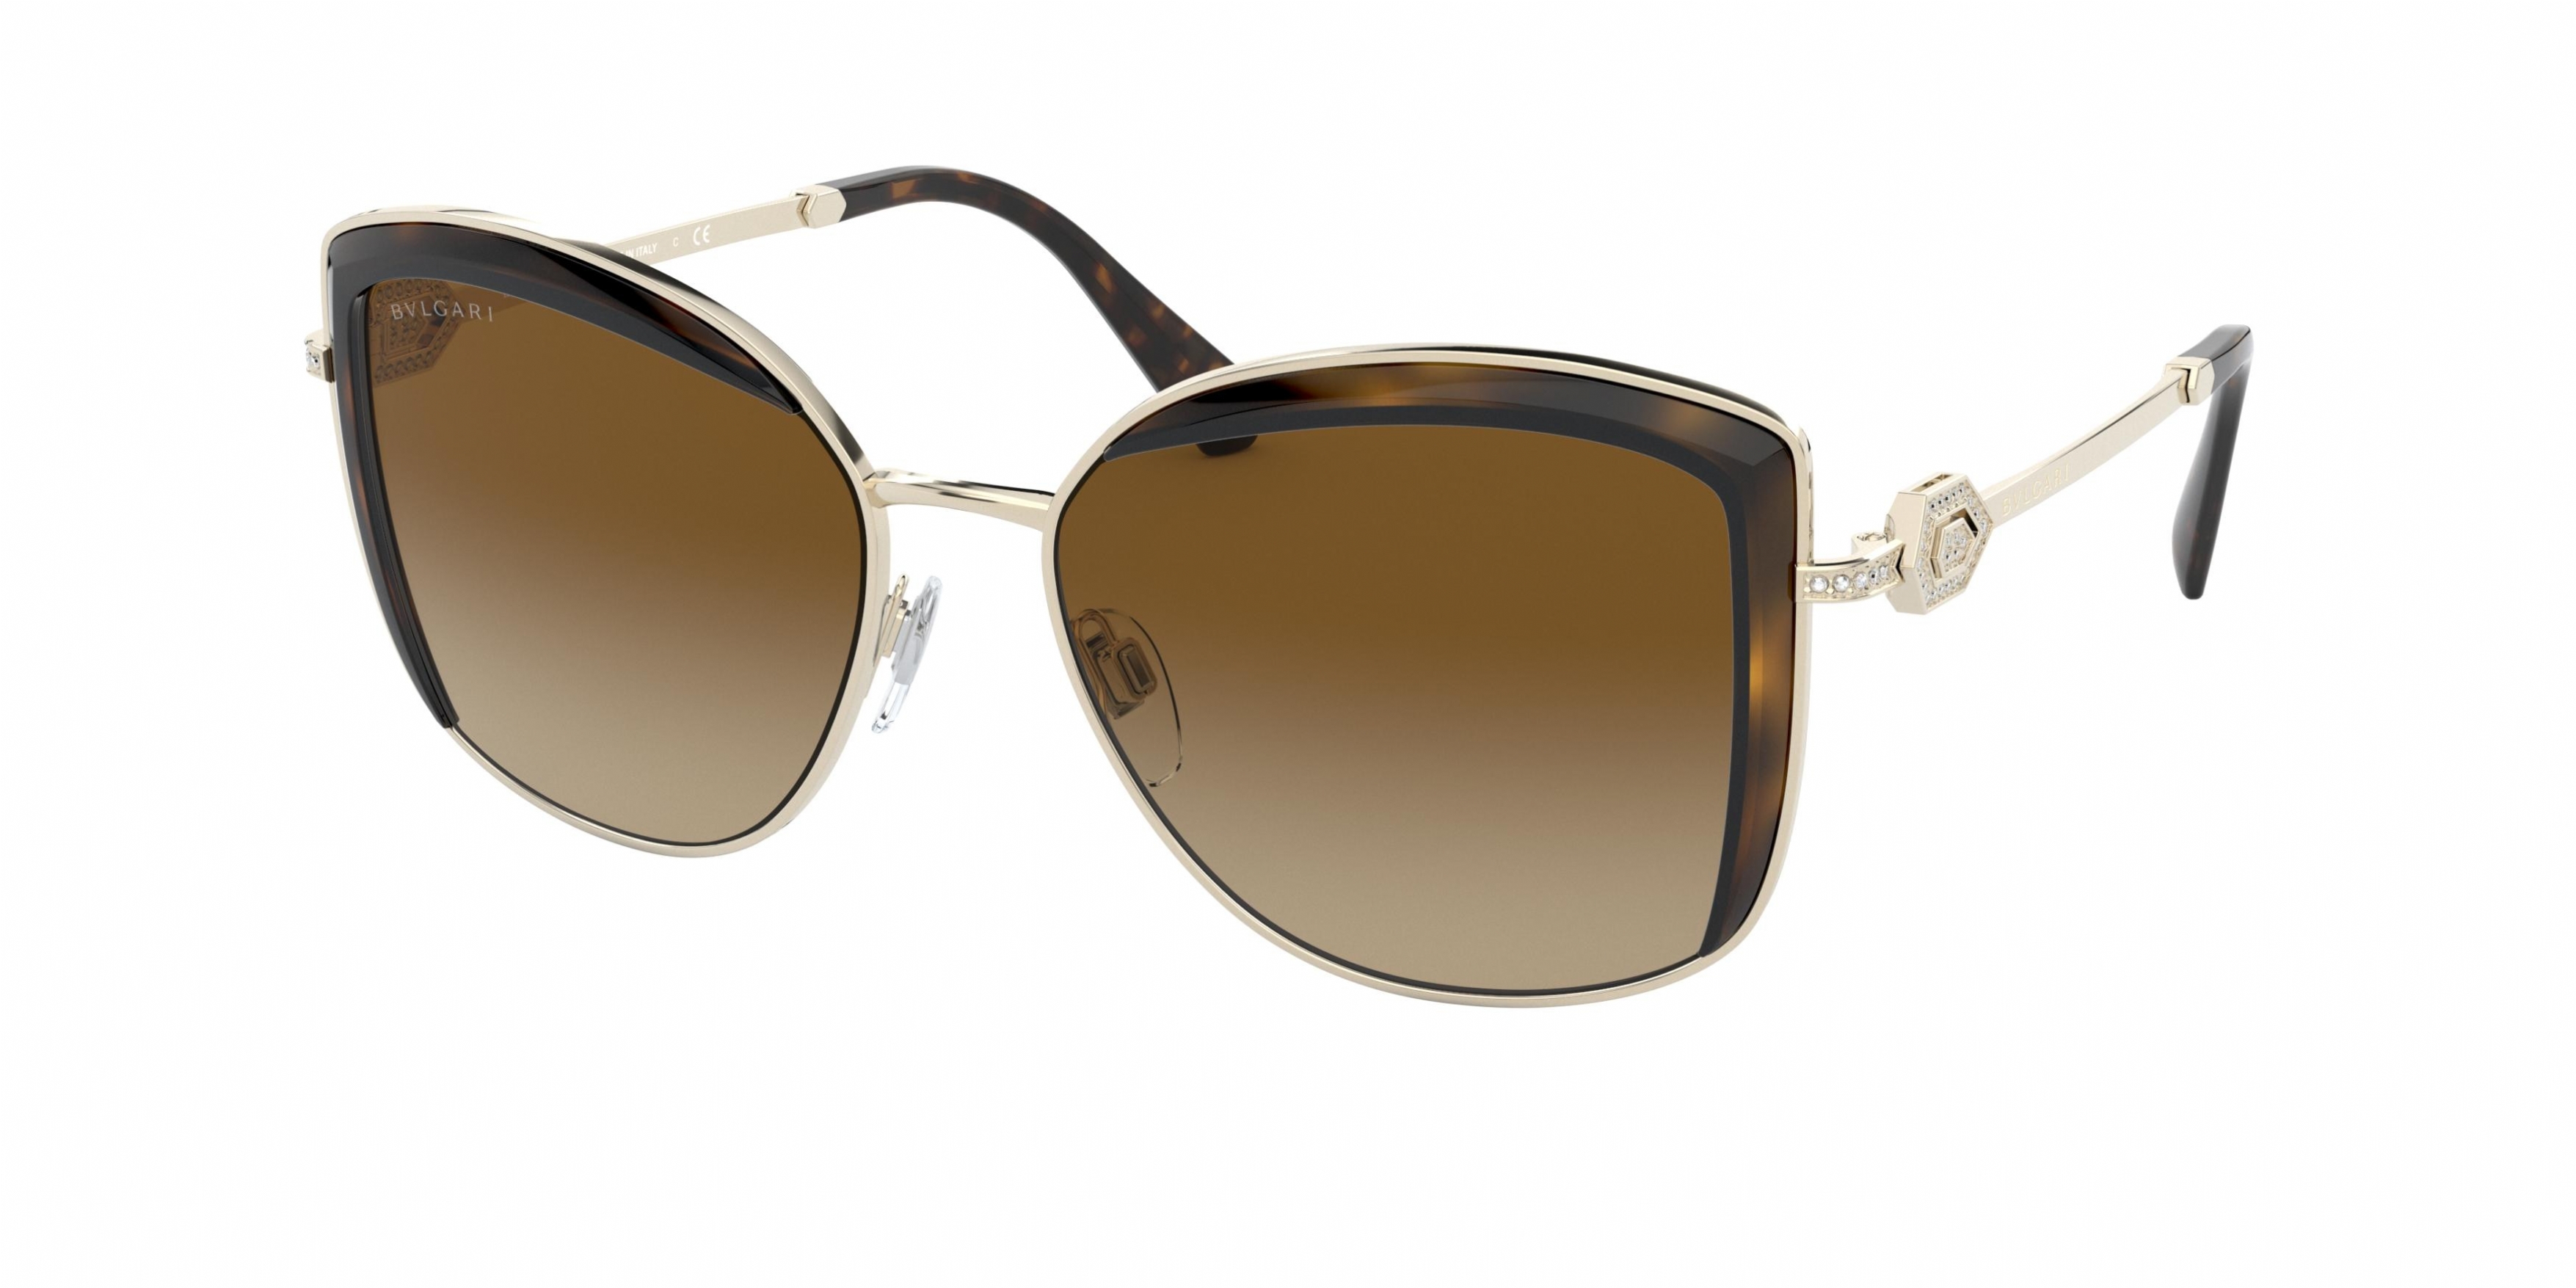 Buy Bvlgari Sunglasses directly from OpticsFast.com